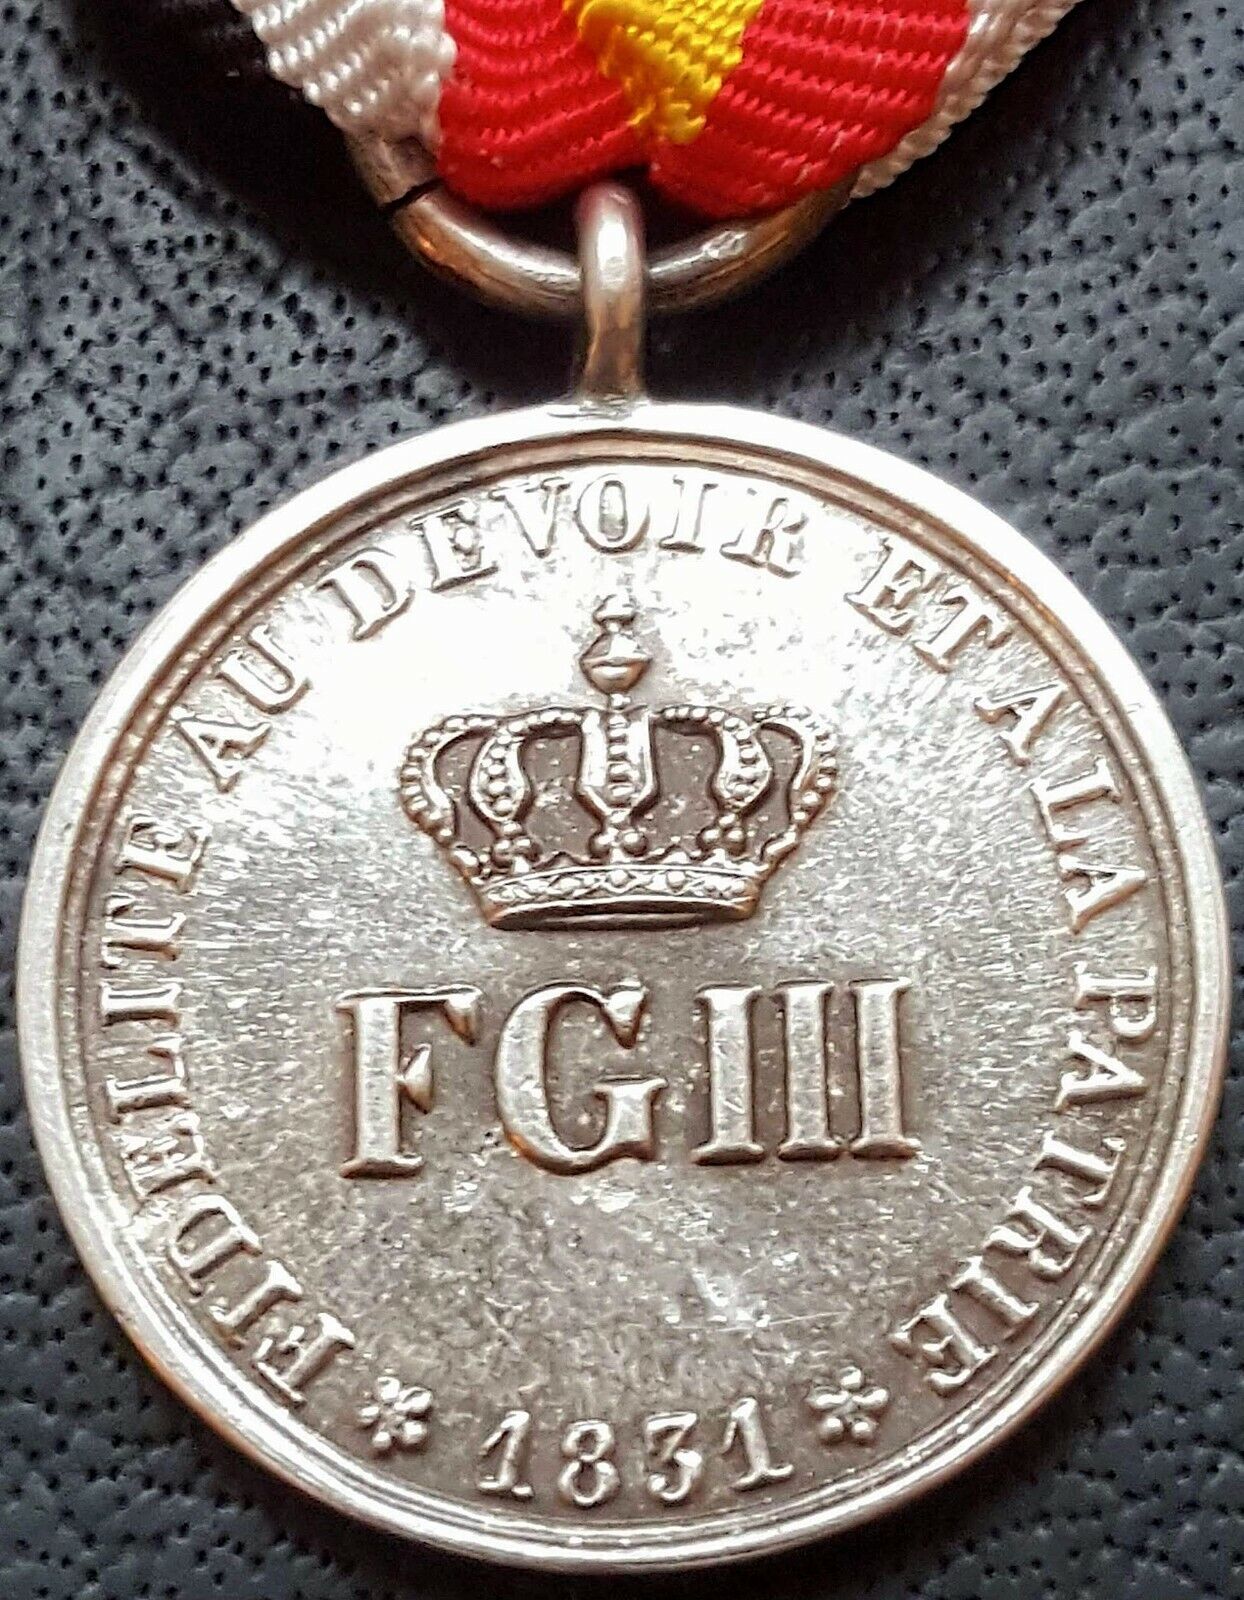 ✚9765✚ German Prussian pre WW1 Neufchâtel Commemorative Medal 1832